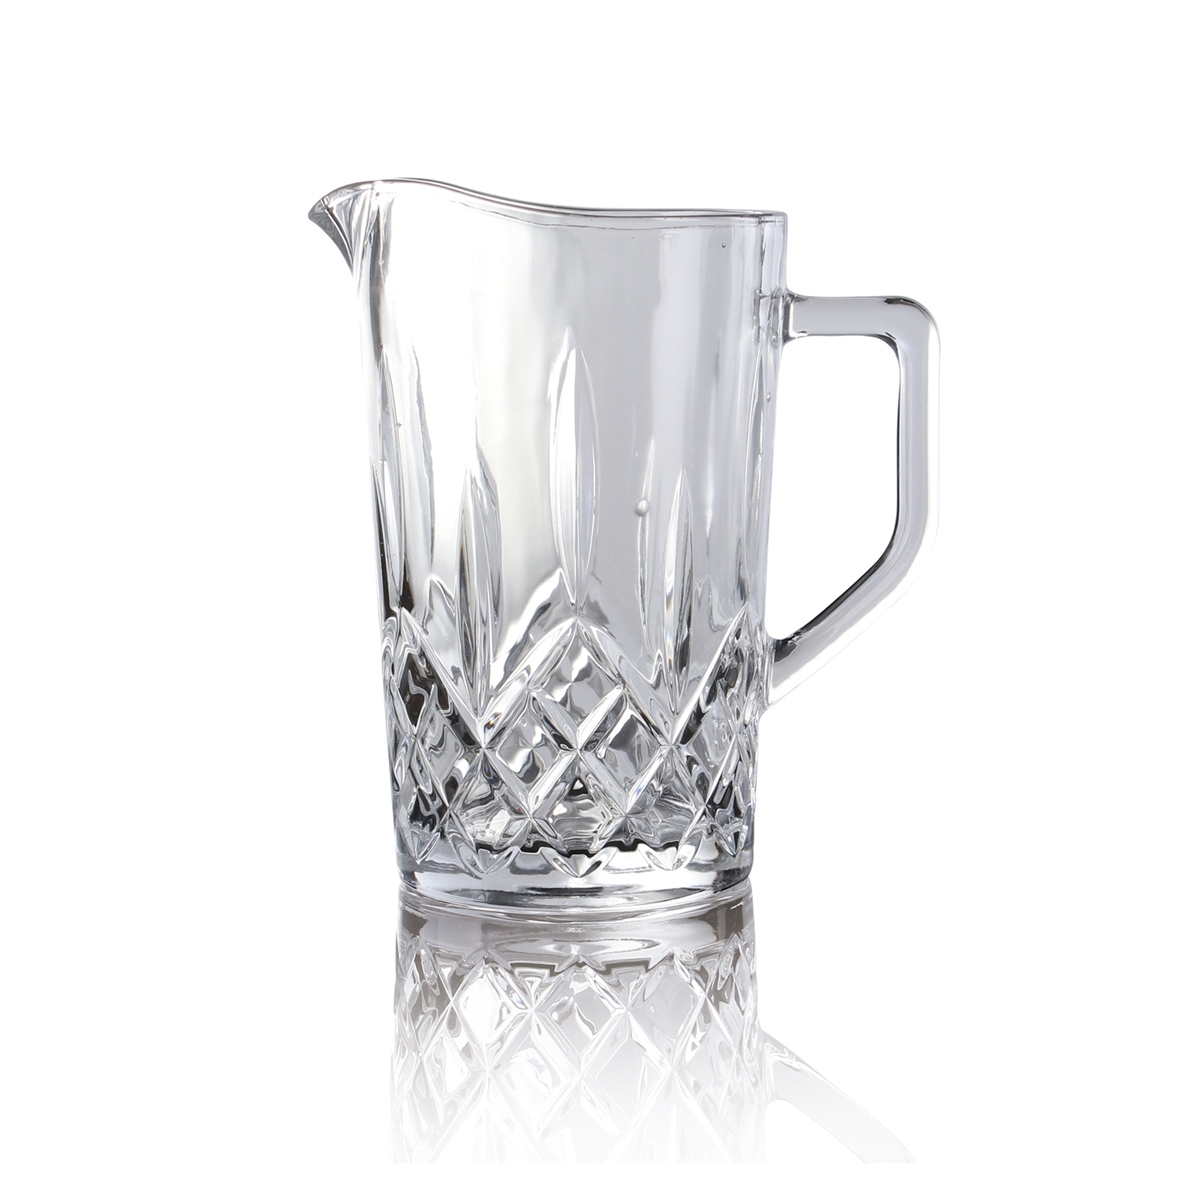 Glaskrug mit Henkel HARVEY 1.2 Liter - Vintage Krug aus Glas als Wasserkrug oder Bierkrug